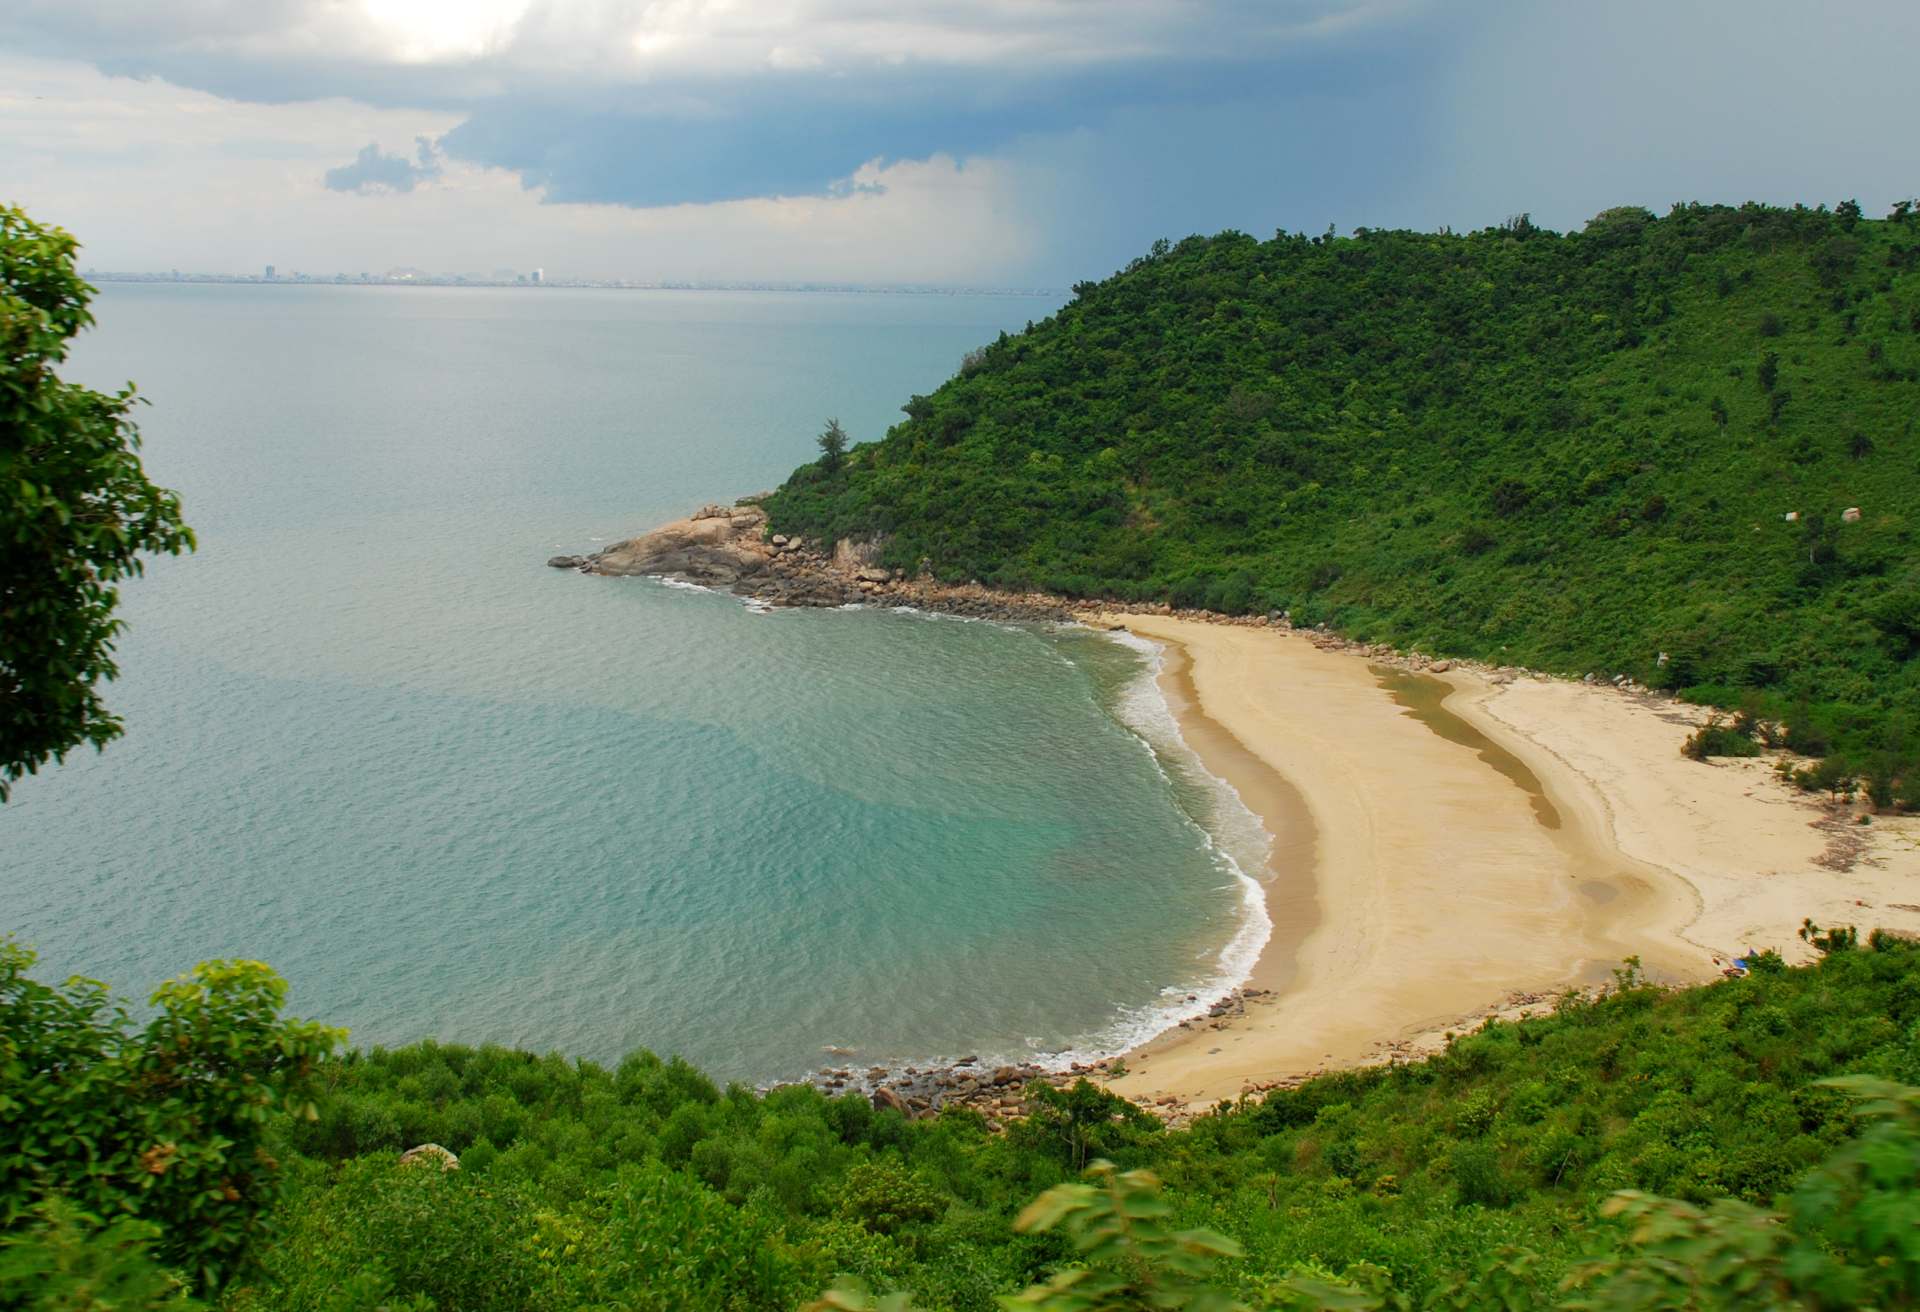 Secluded beach in Vietnam north of Da Nang